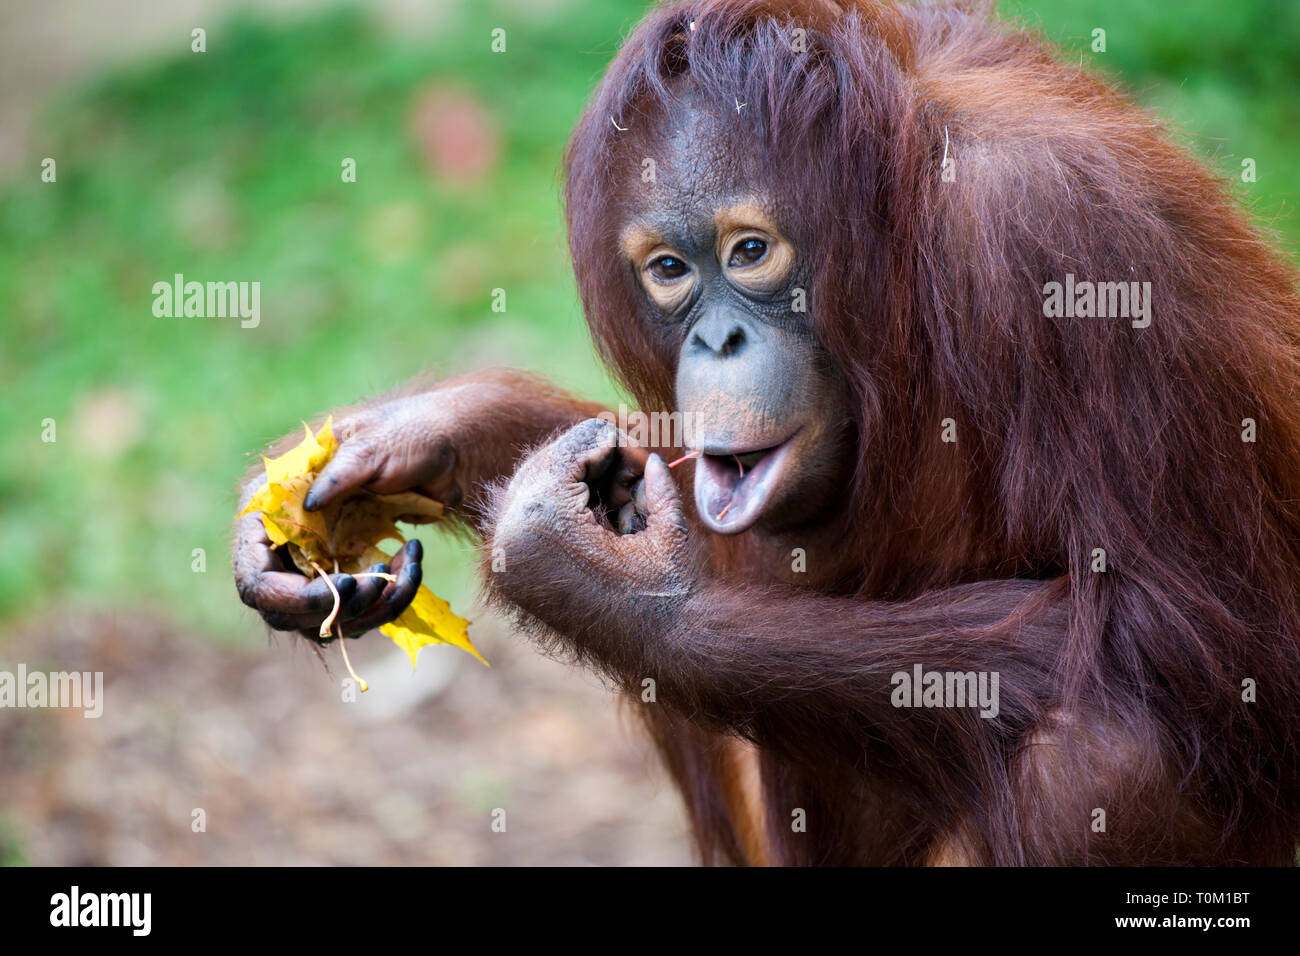 Orangutan Eating Leaves Stock Photo